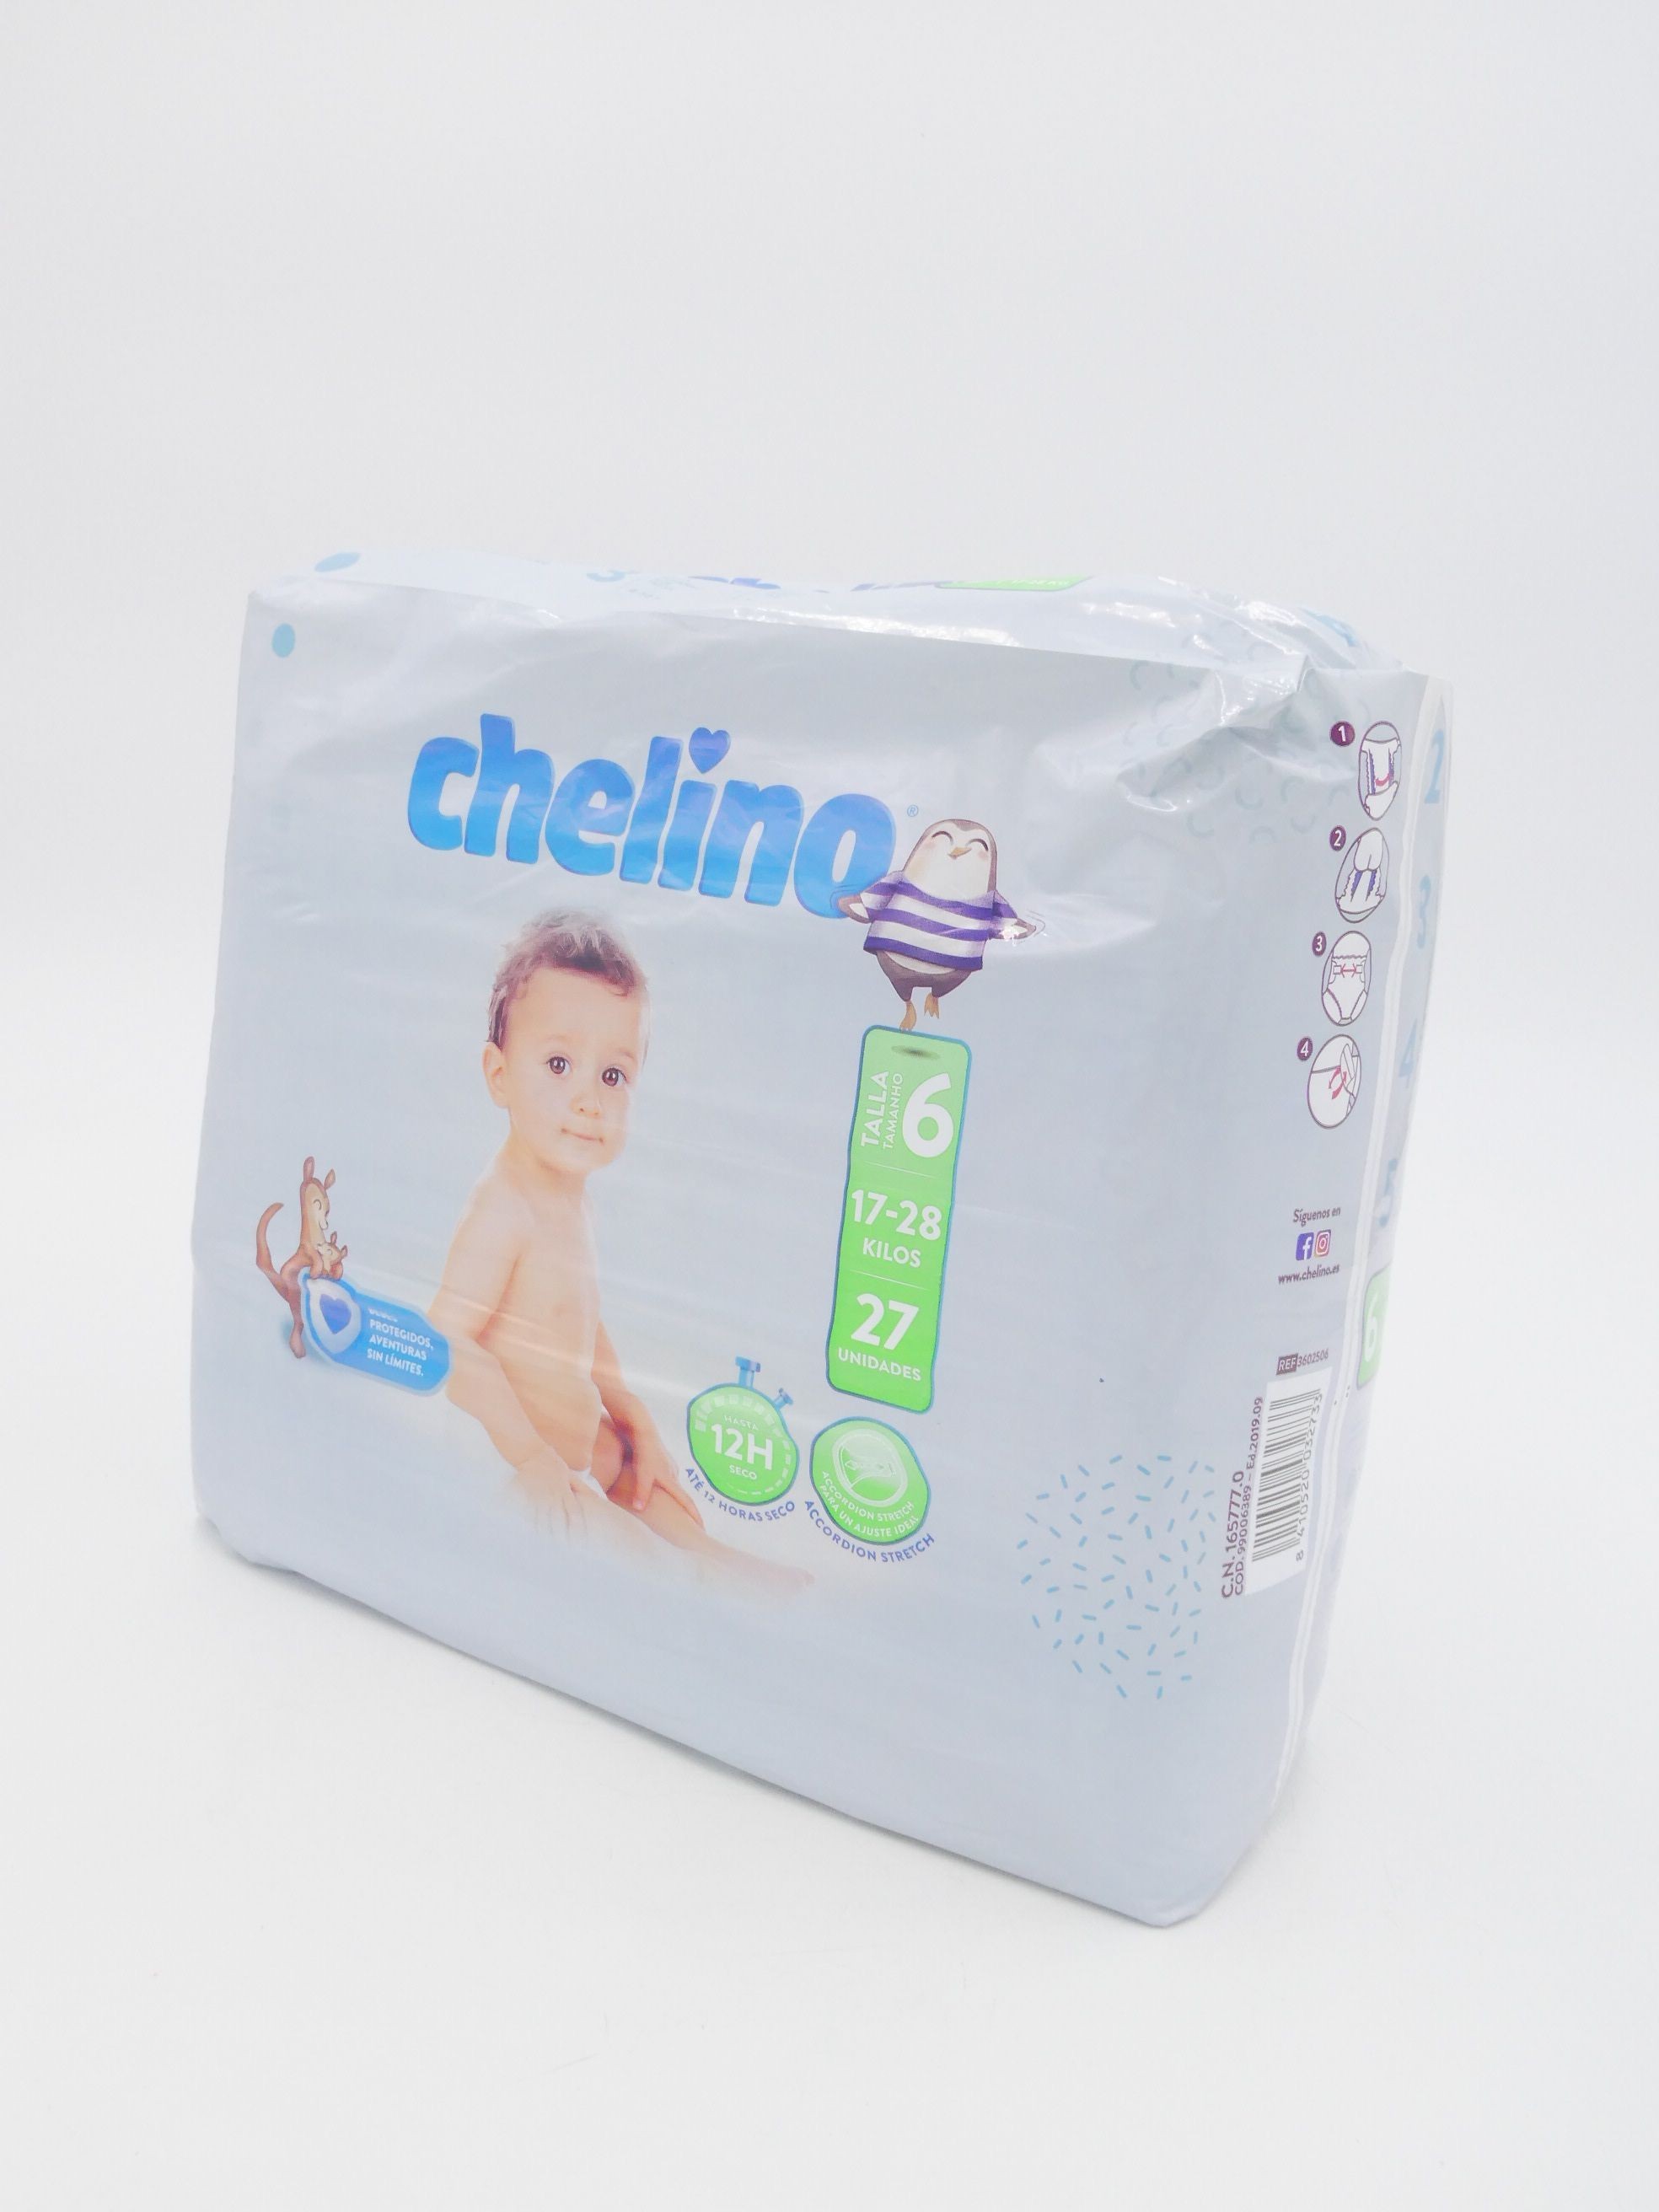 Chelino Pañal infantil Talla 3 (4-10kg), 36 Unidades ( Paquete de 1) :  : Bebé